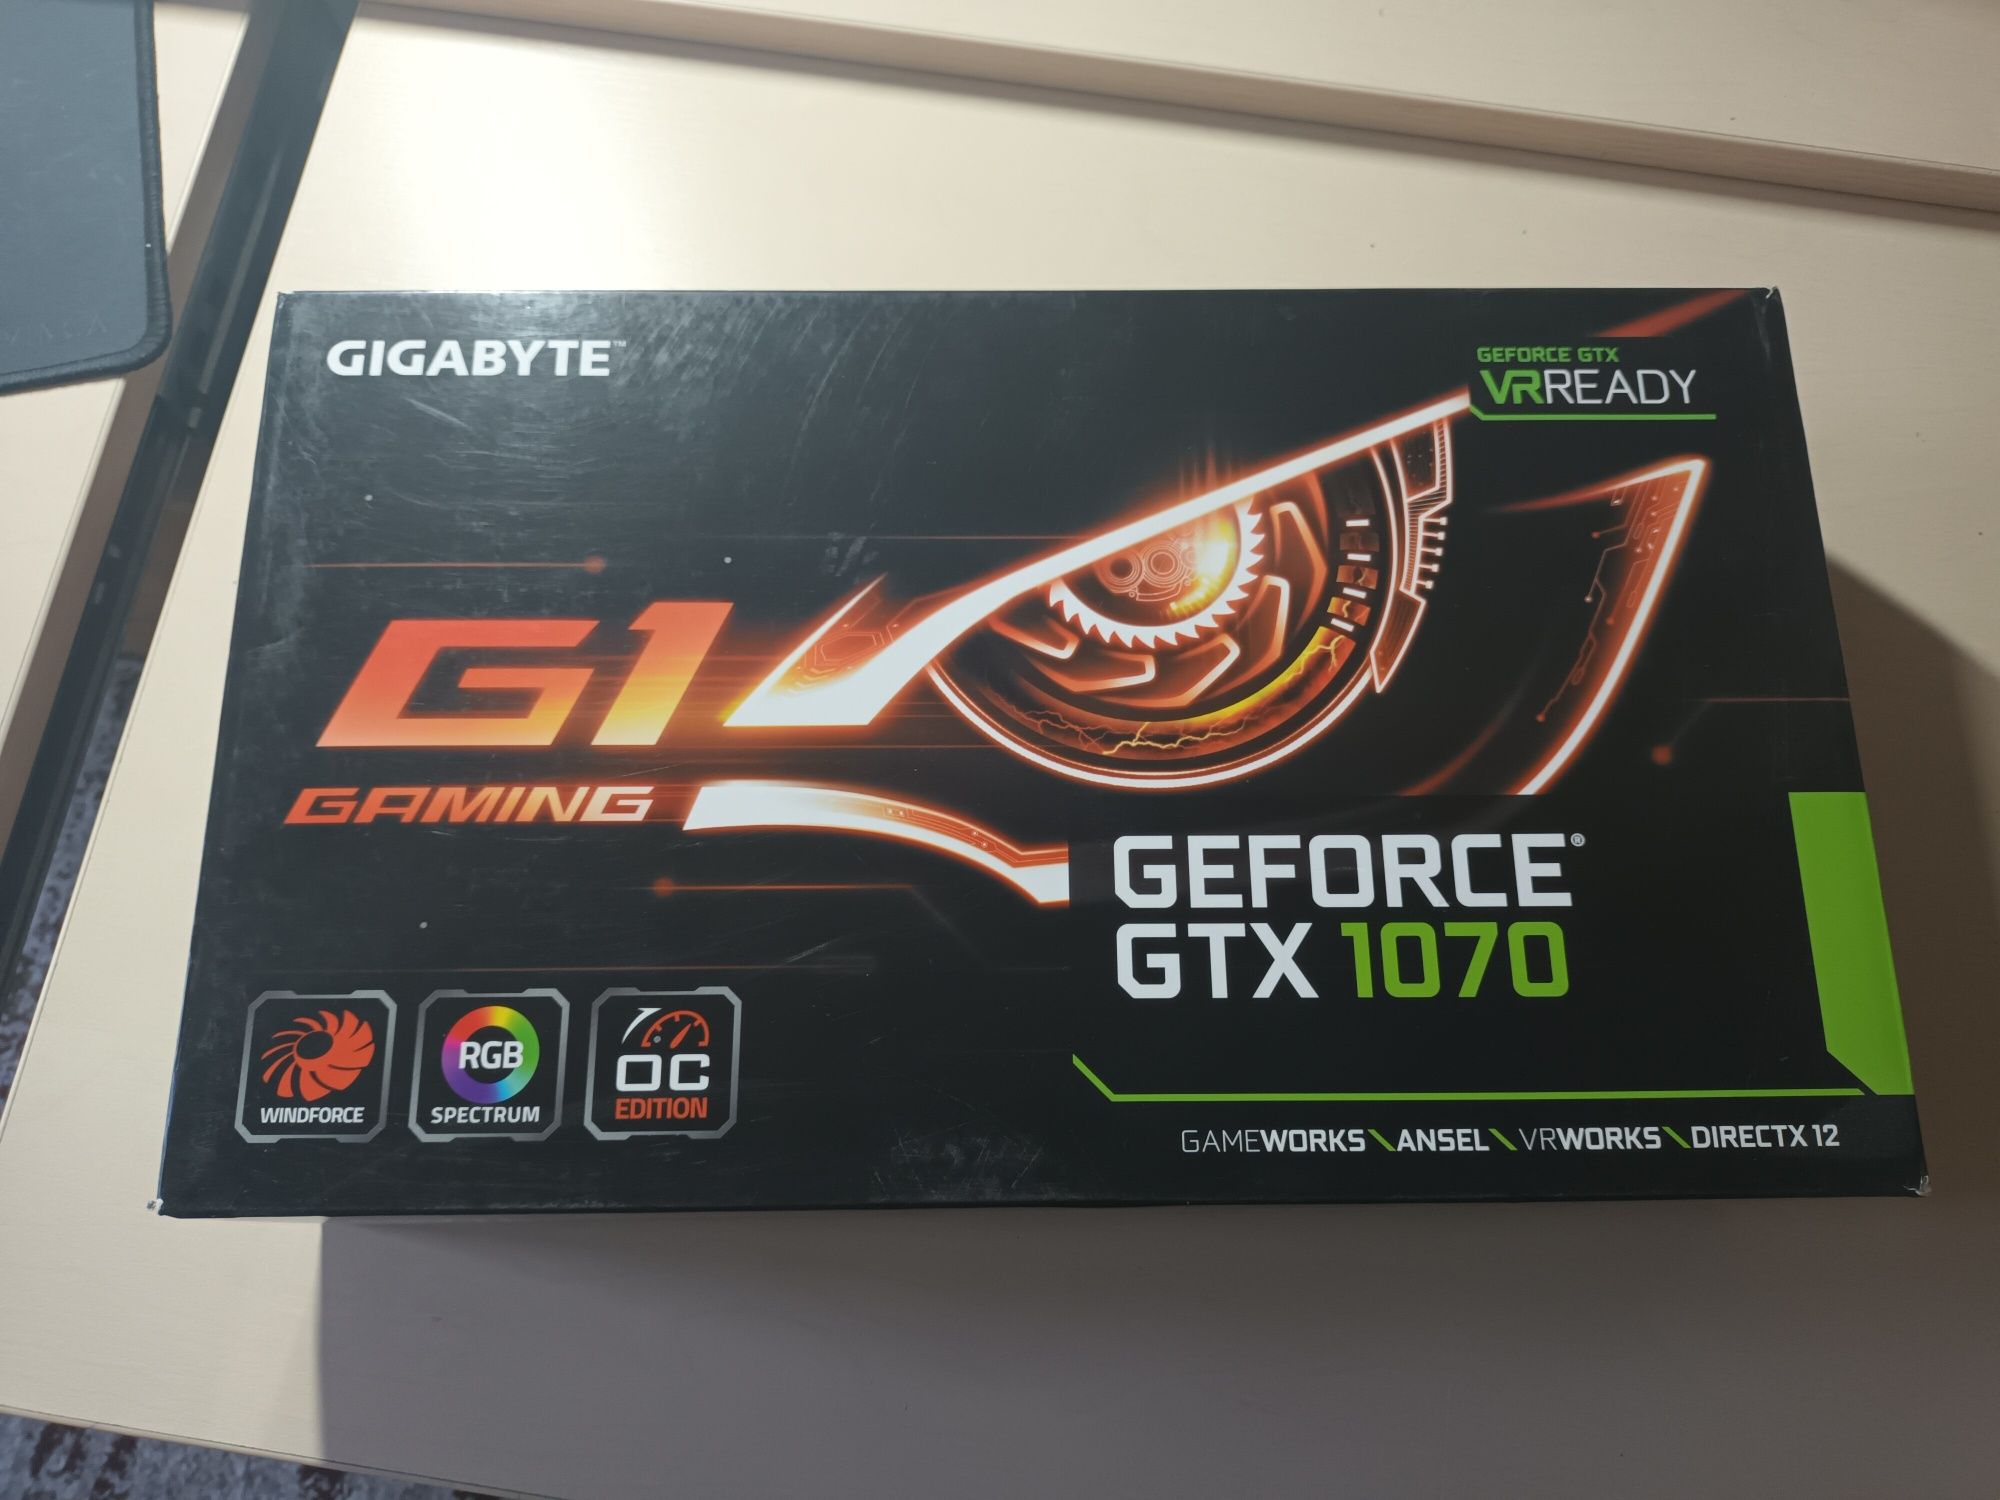 Gigabyte gtx 1070 8gb g1 gaming коробка